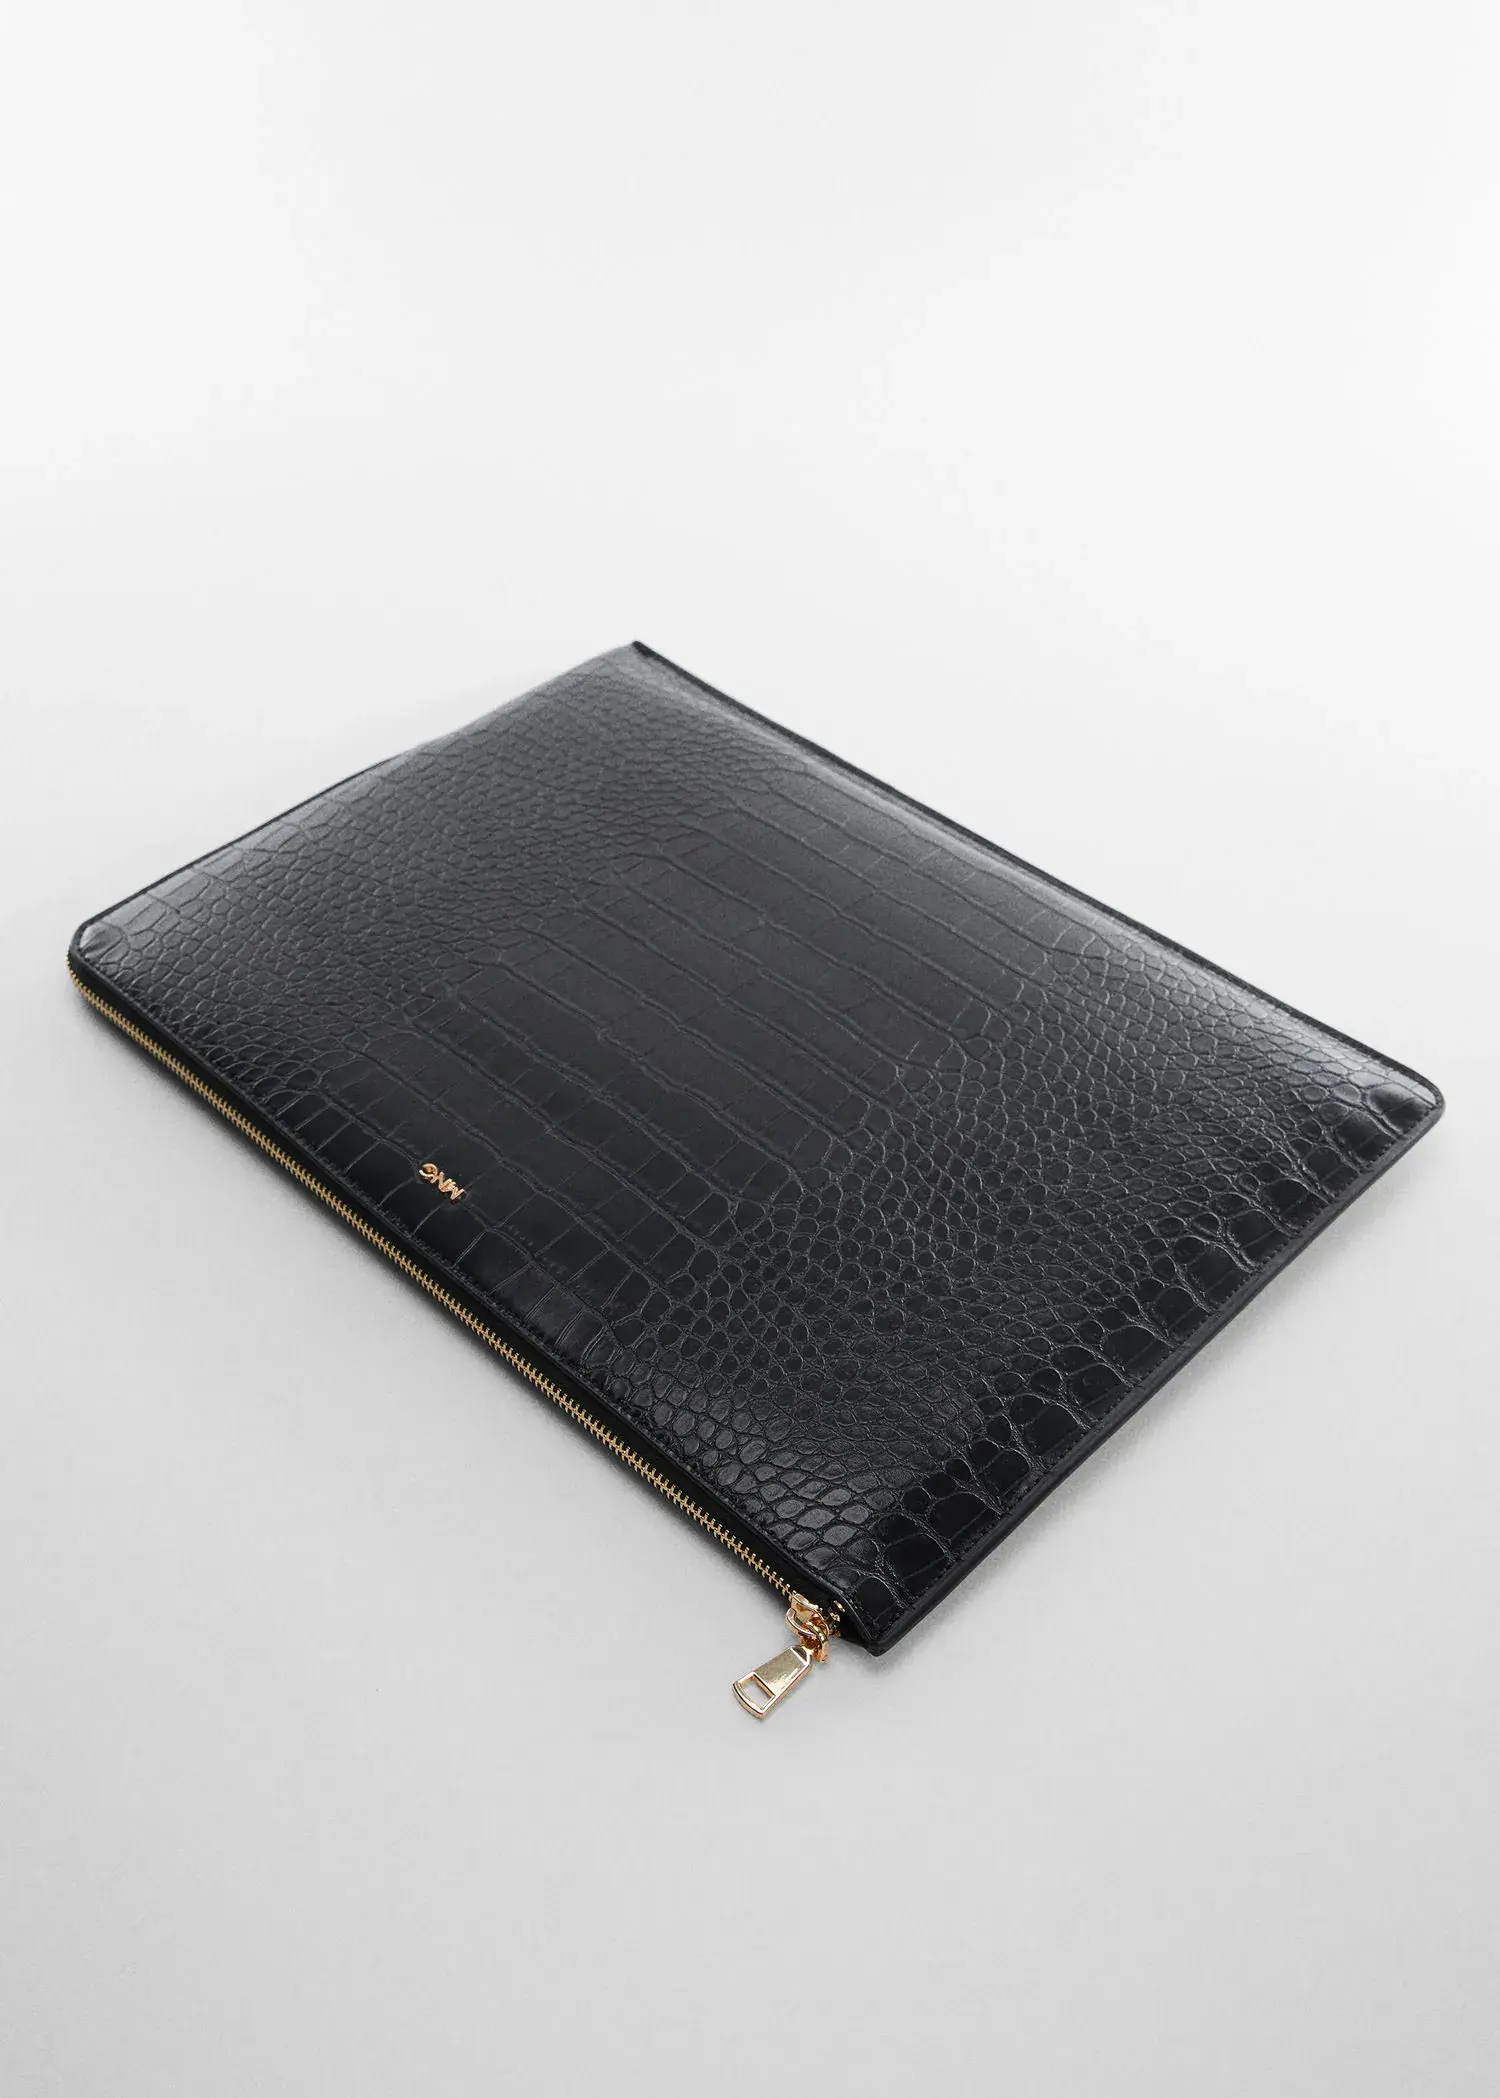 Mango Animal print laptop case. a laptop case that is black and has a gold zipper. 